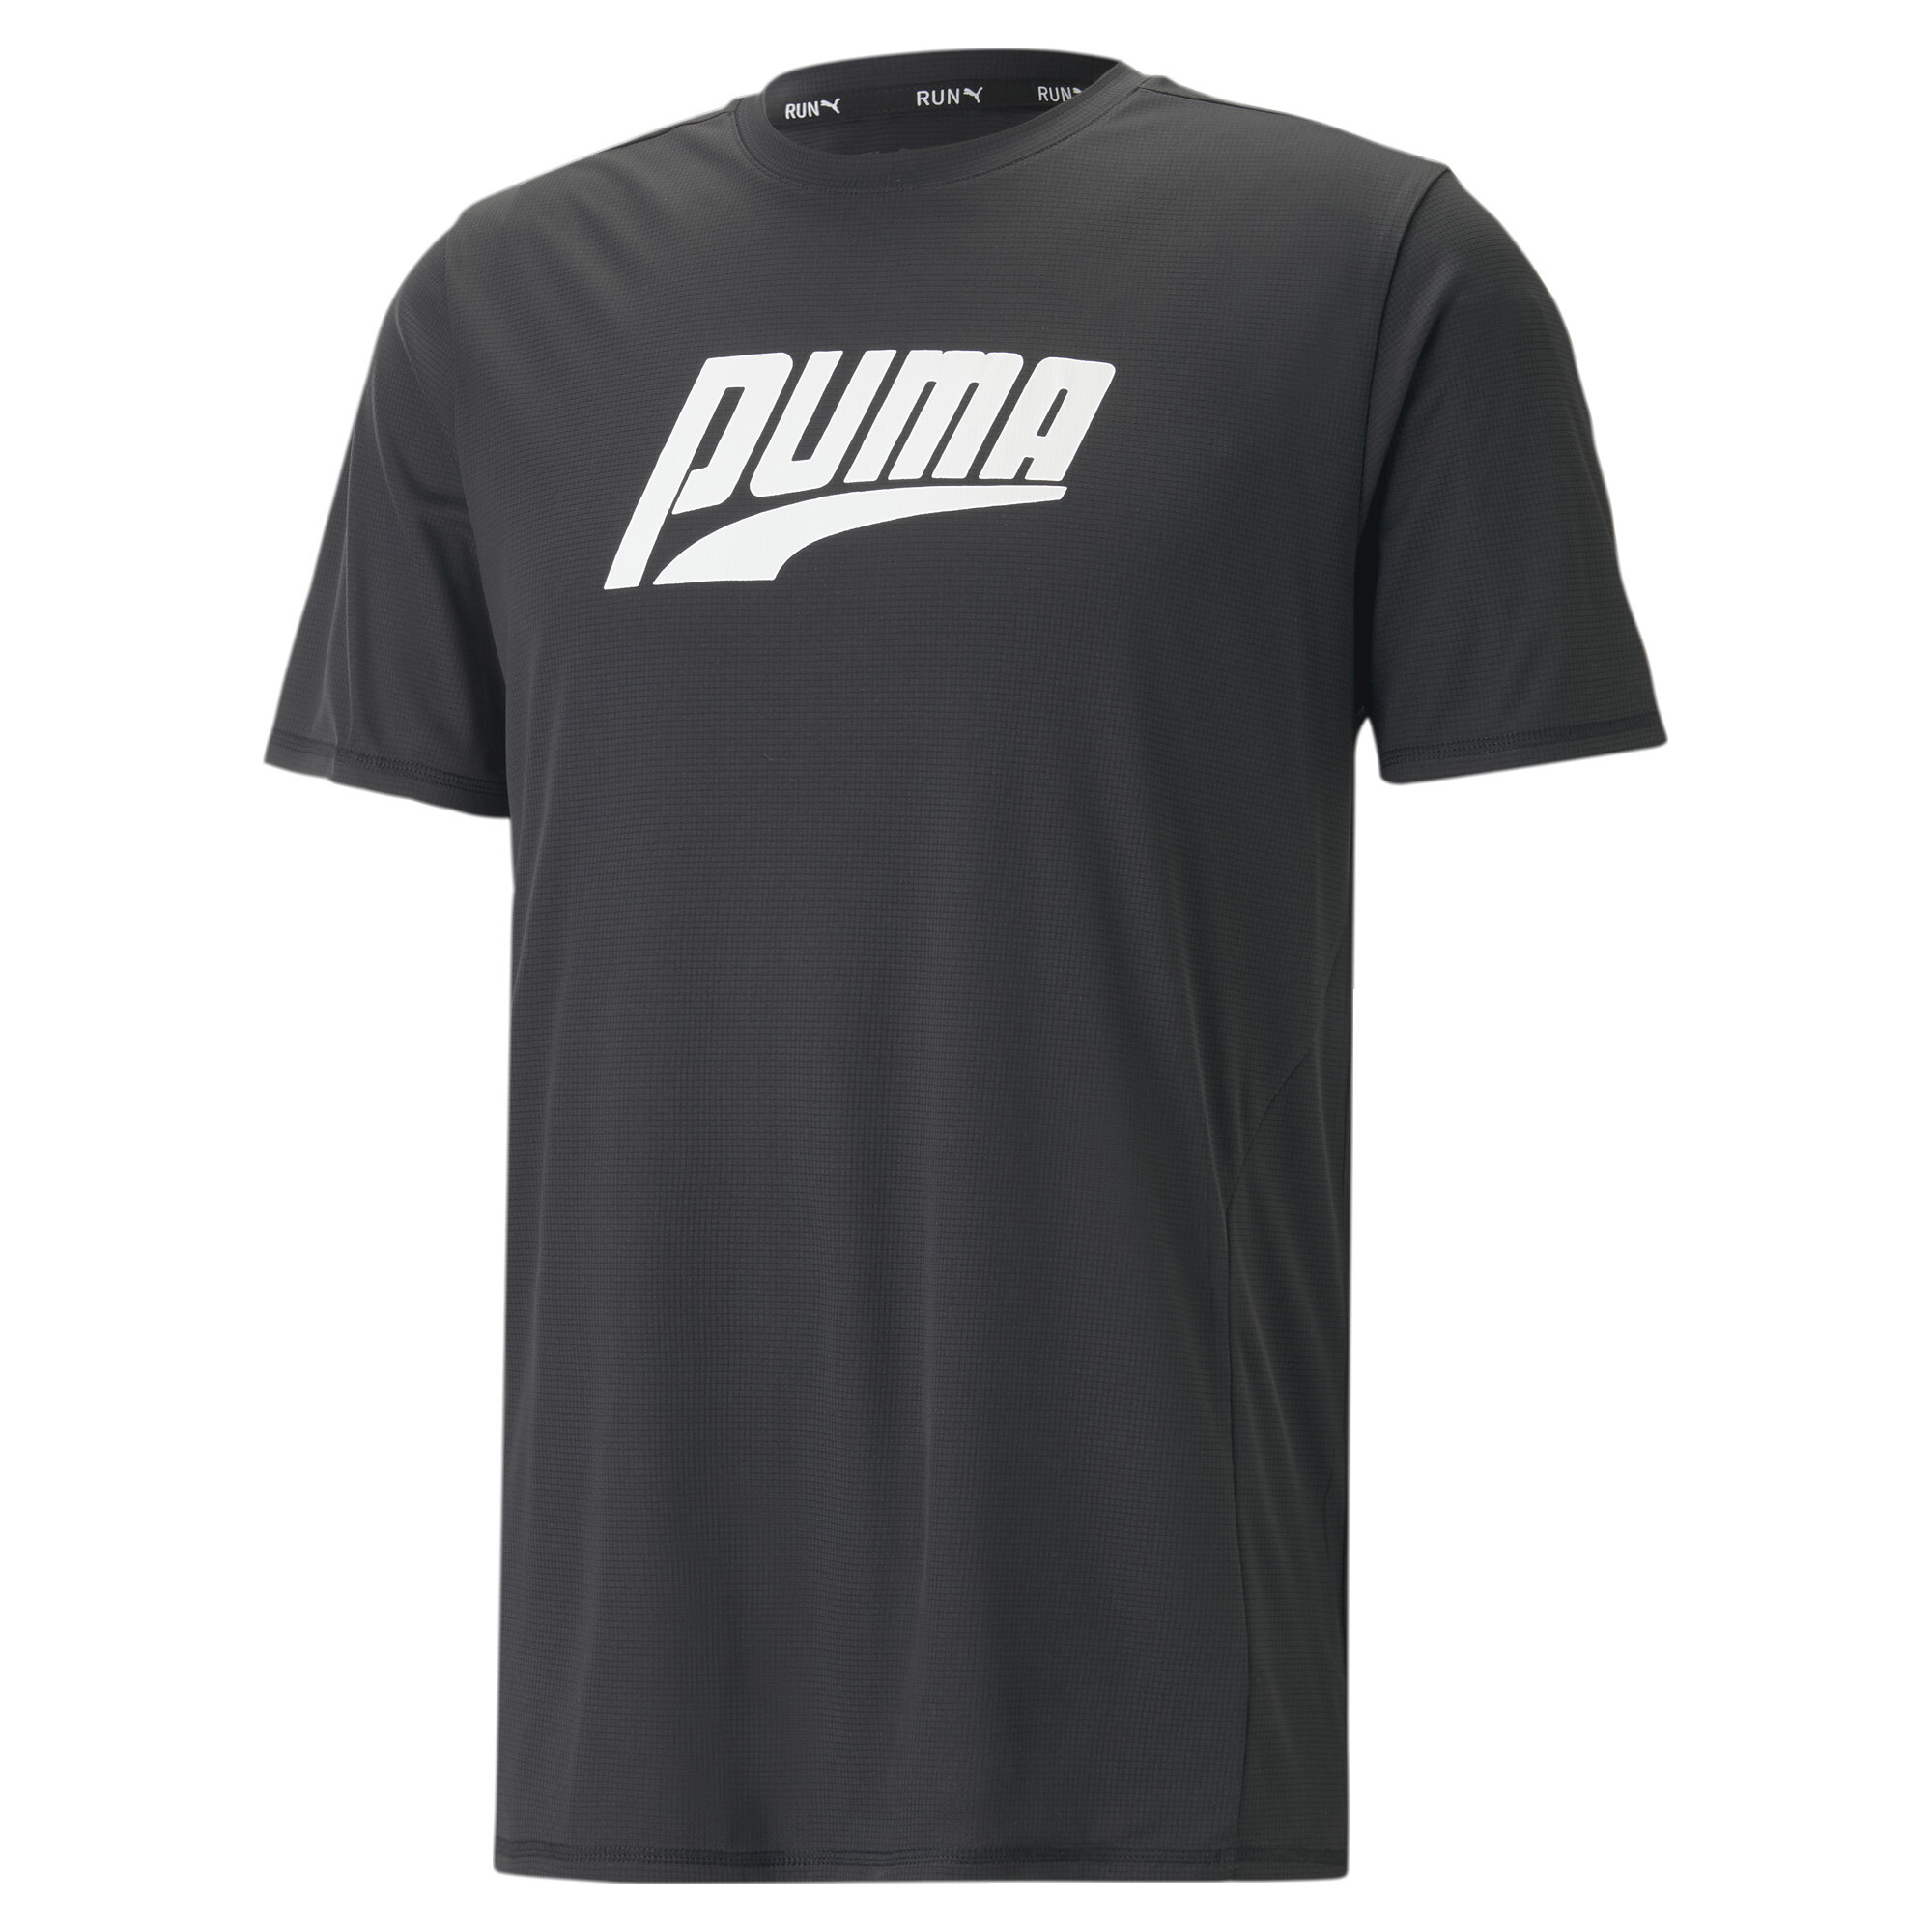 Men's PUMA RUN FAVOURITE Short Sleeve Graphic Running T-Shirt Men In Black, Size Small